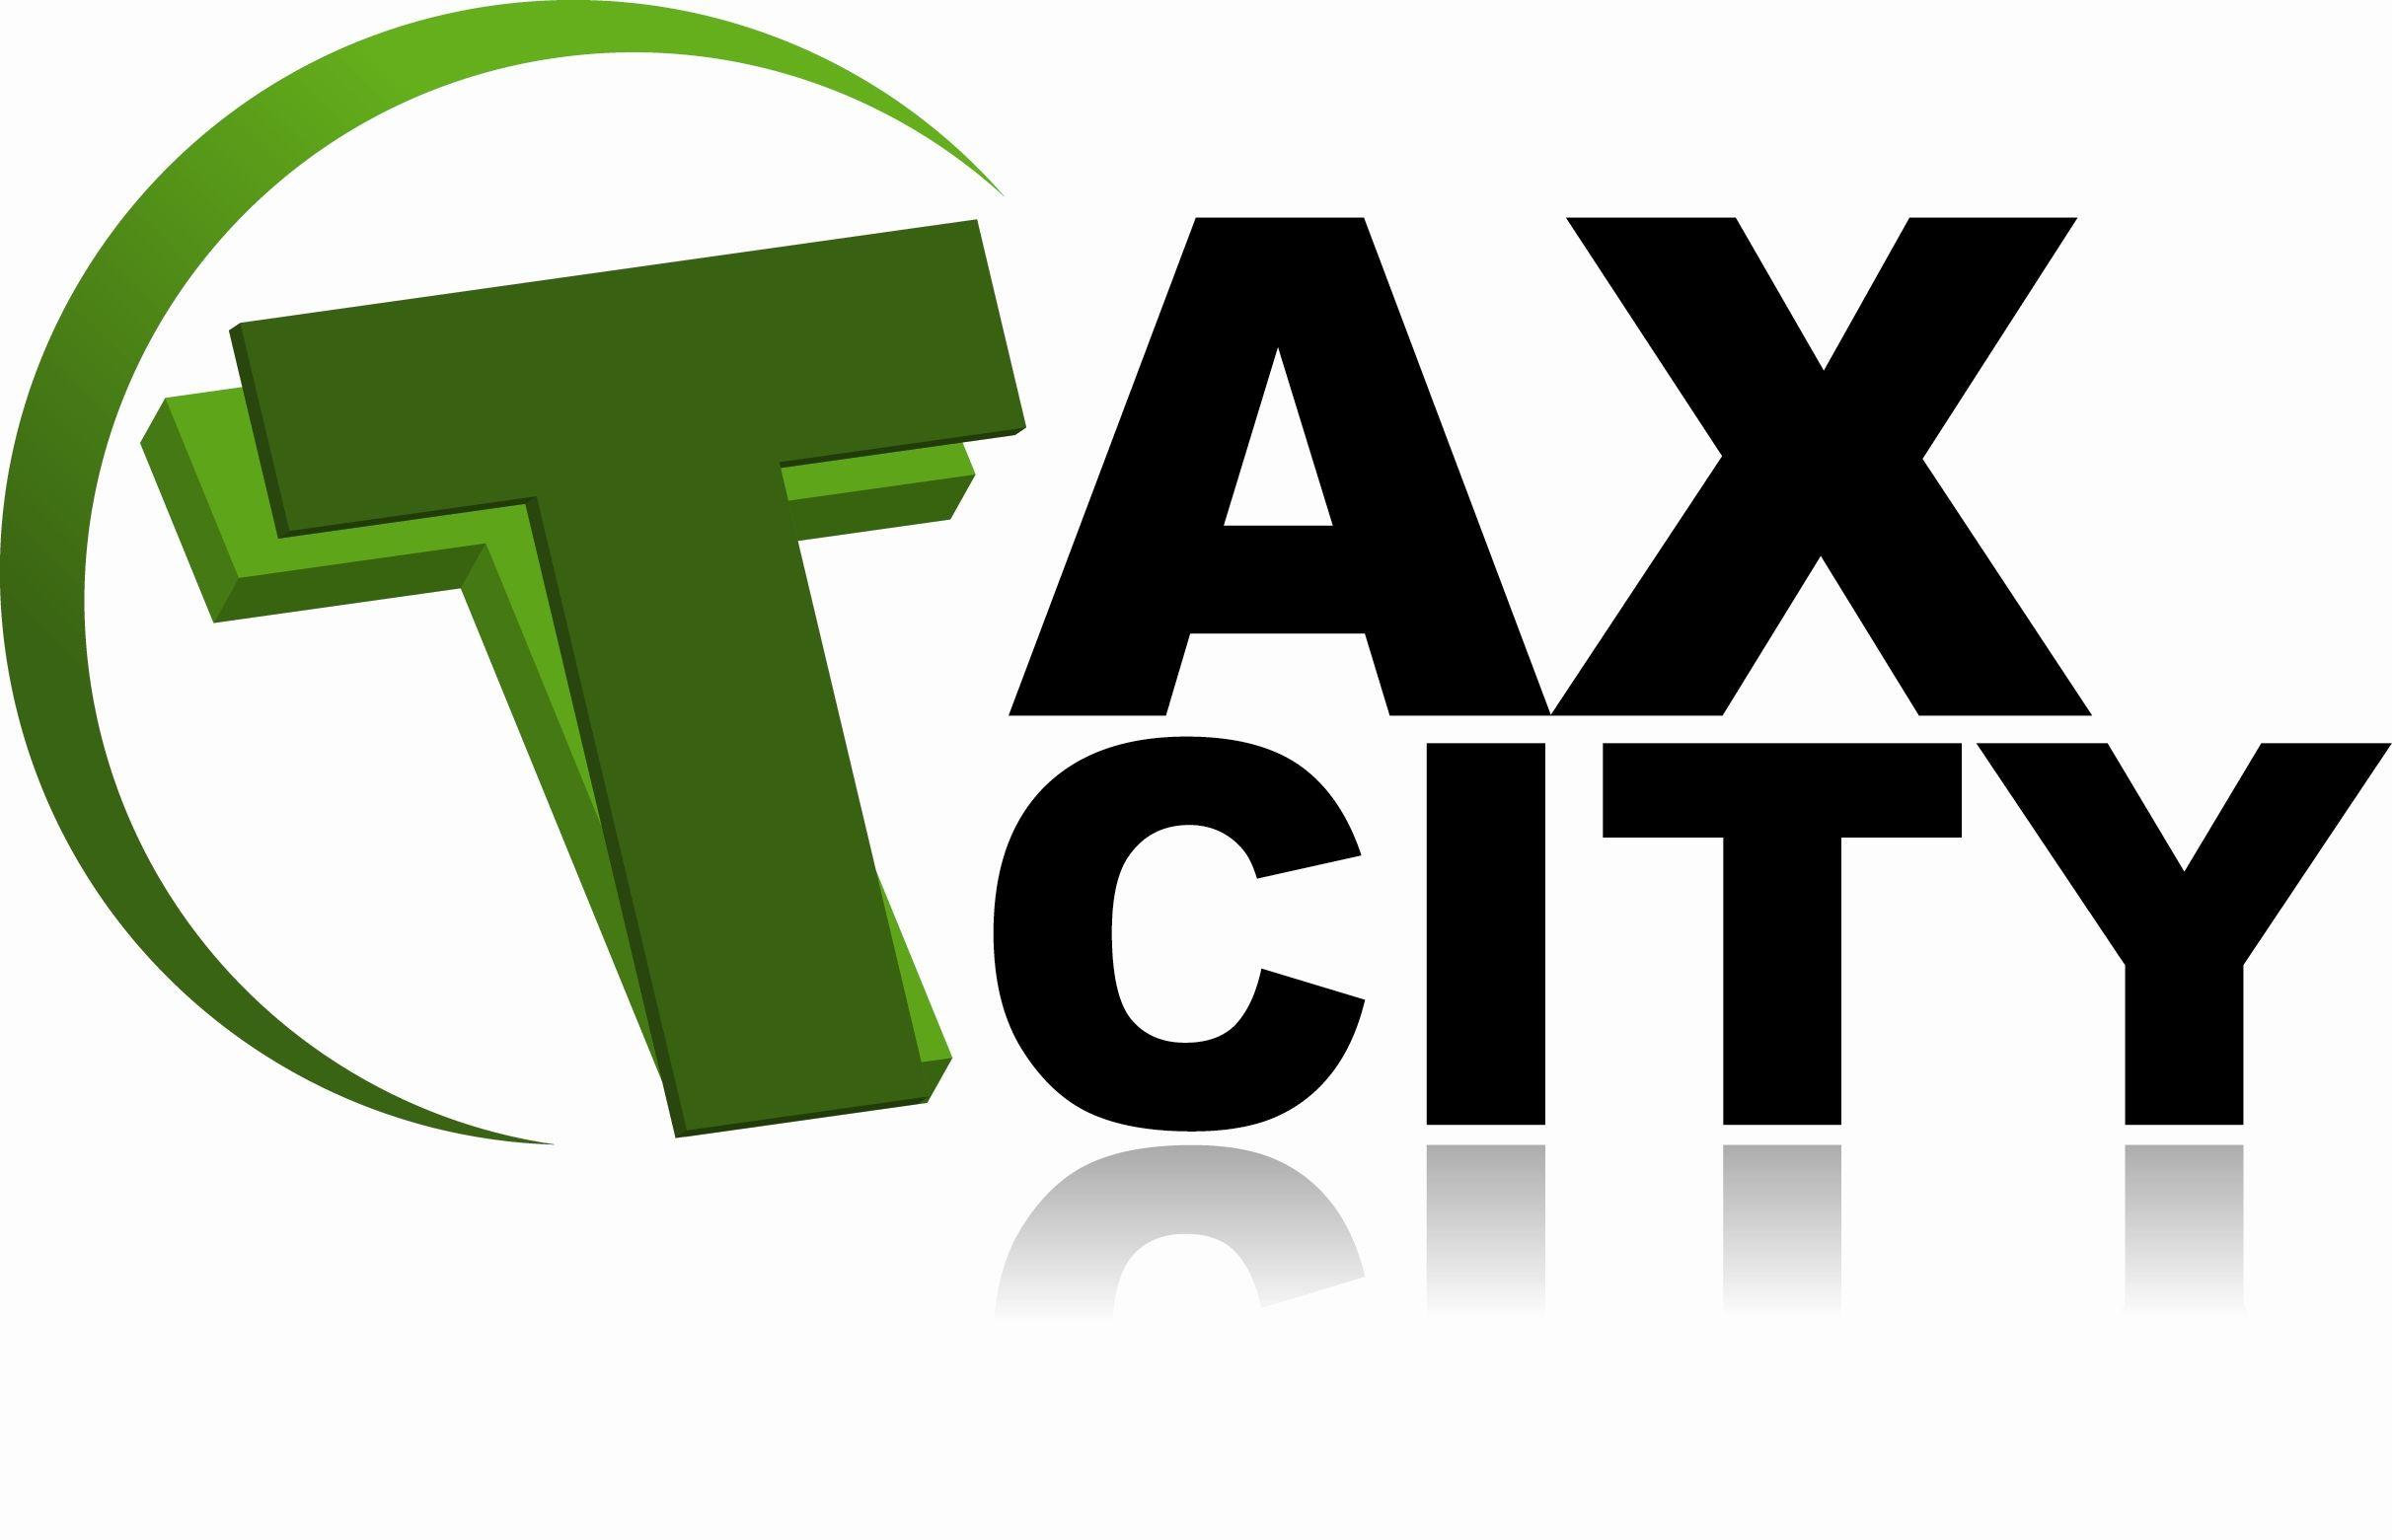 Tax Logo - Tax Logos